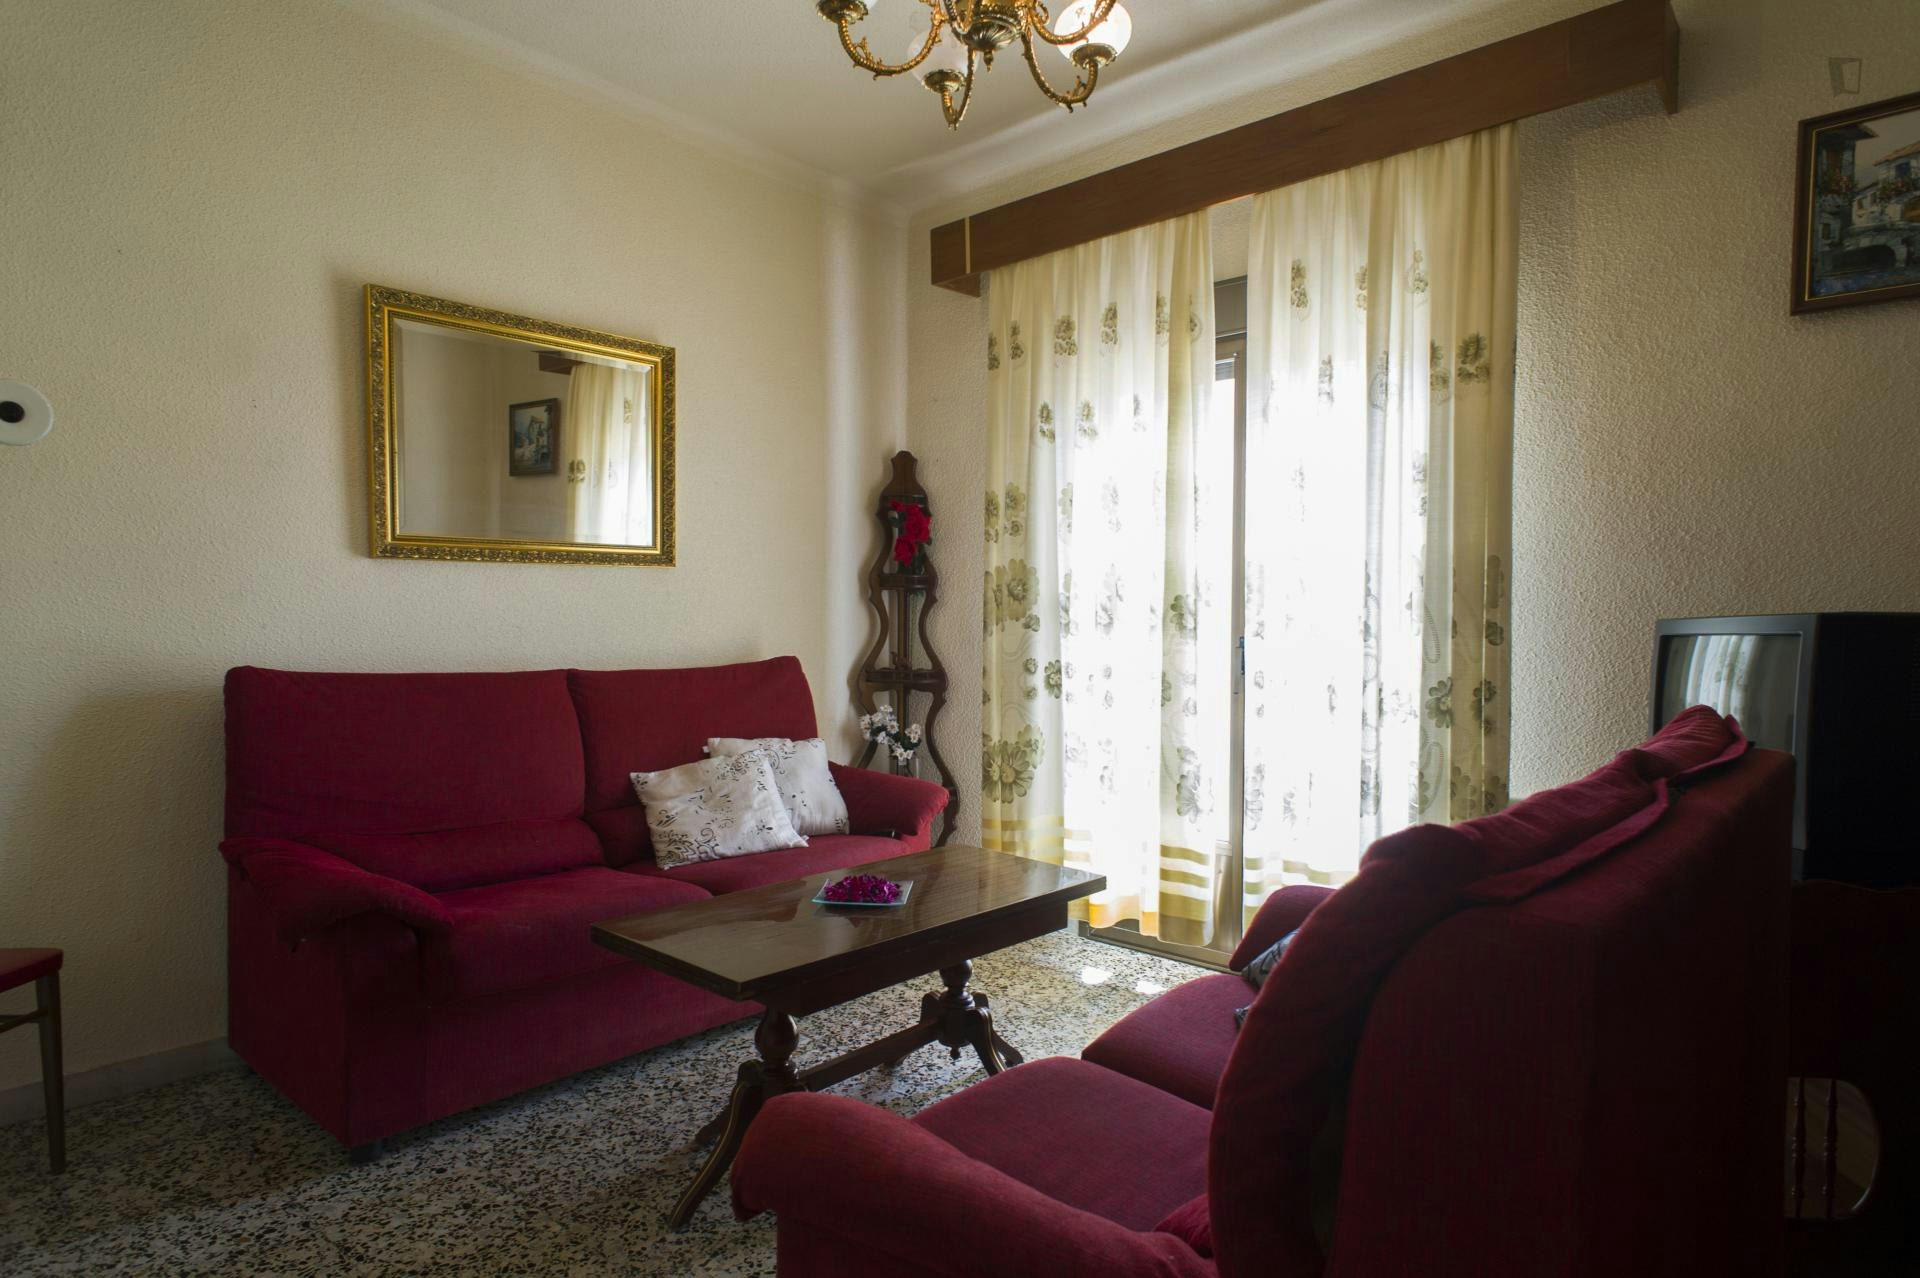 Homely 2-bedroom apartment near Plaza del Barrio Vidal